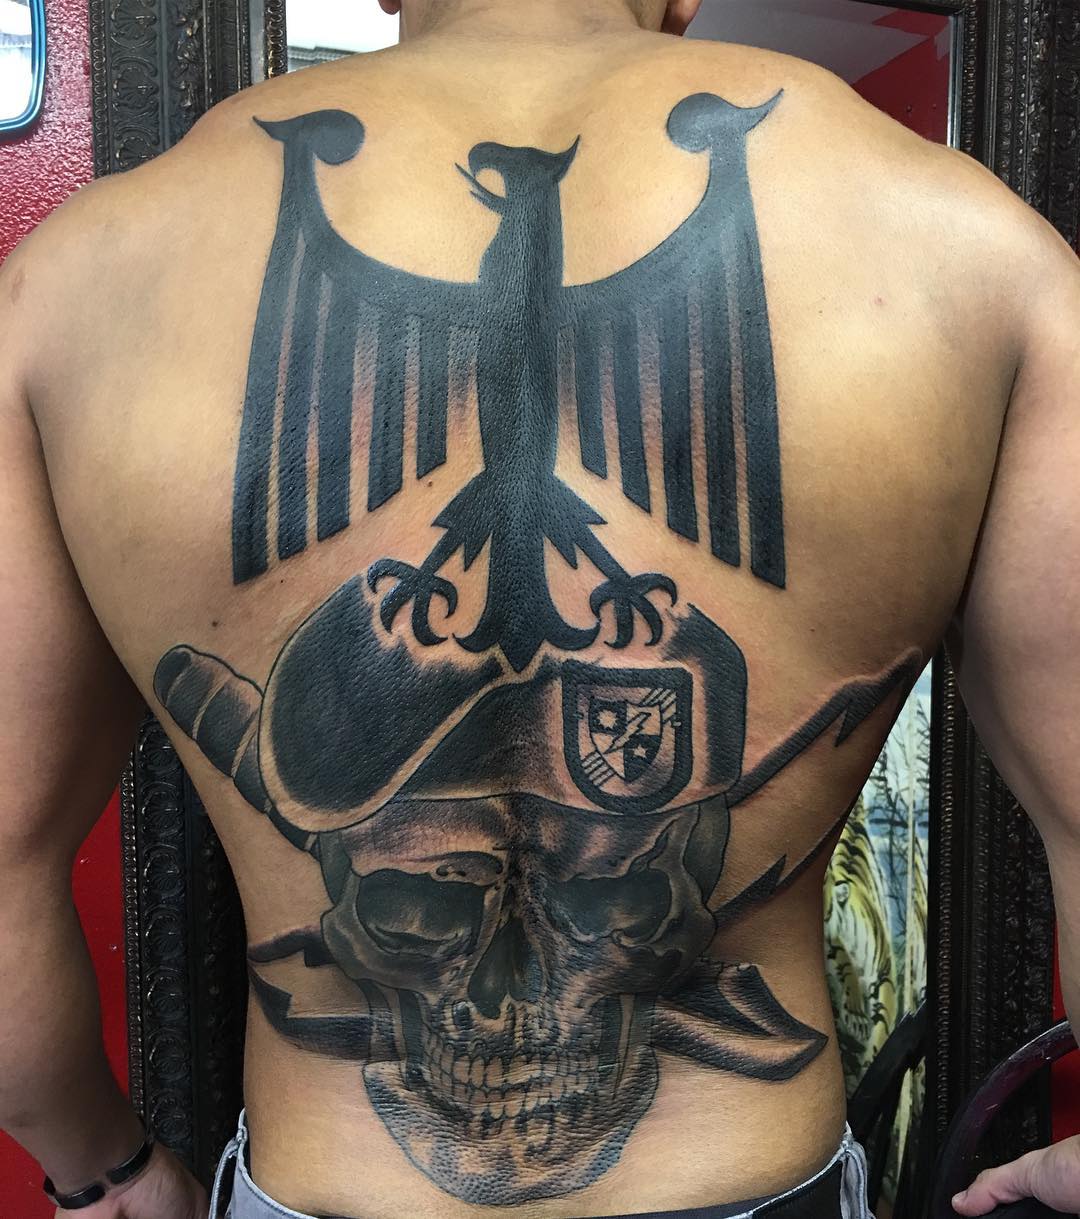 Tattoo Designs Army Army Military